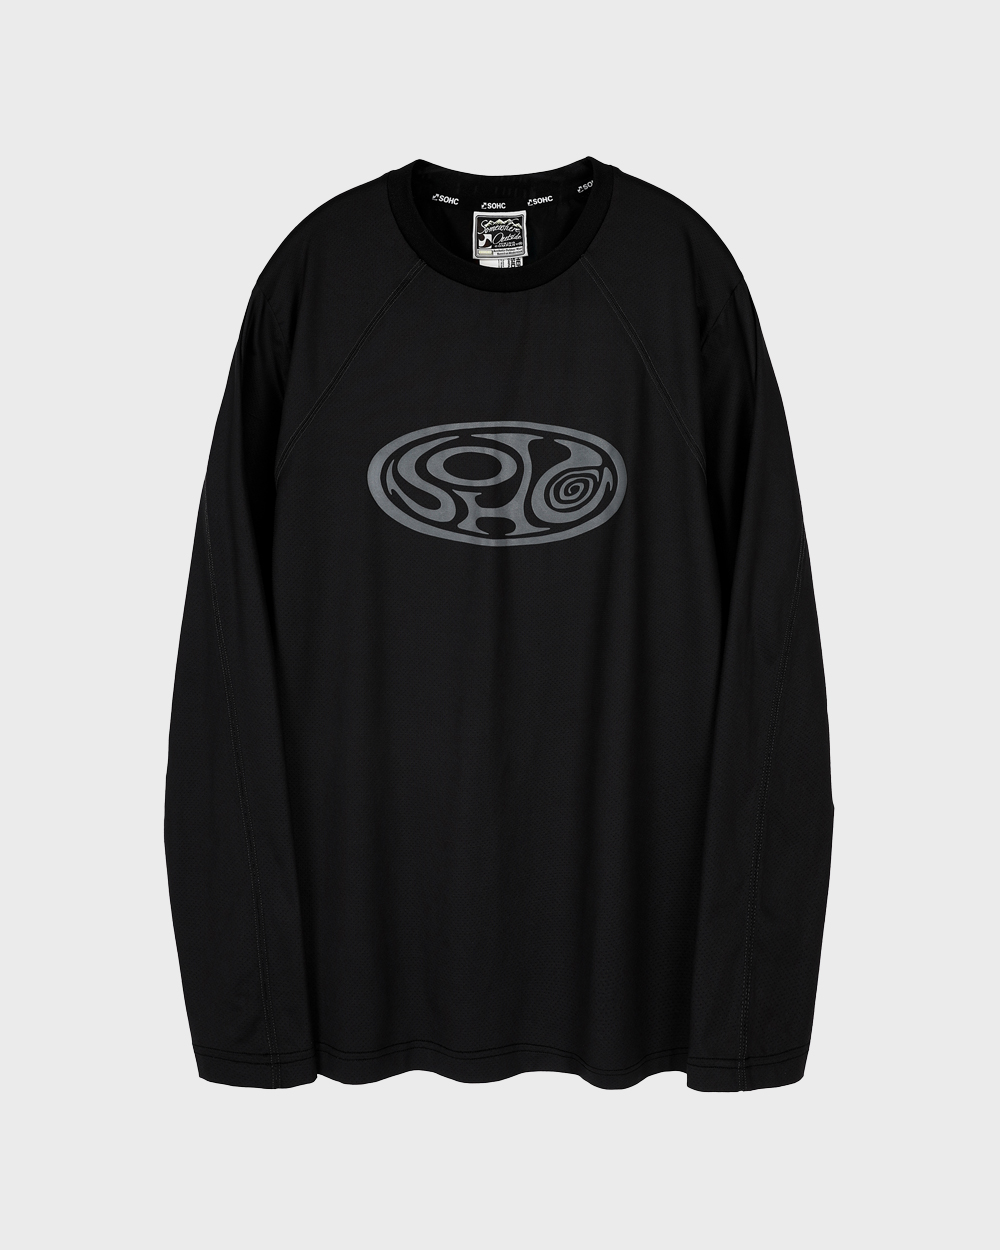 Hatching Egg SOHC Reflective Print T Shirt (Black)